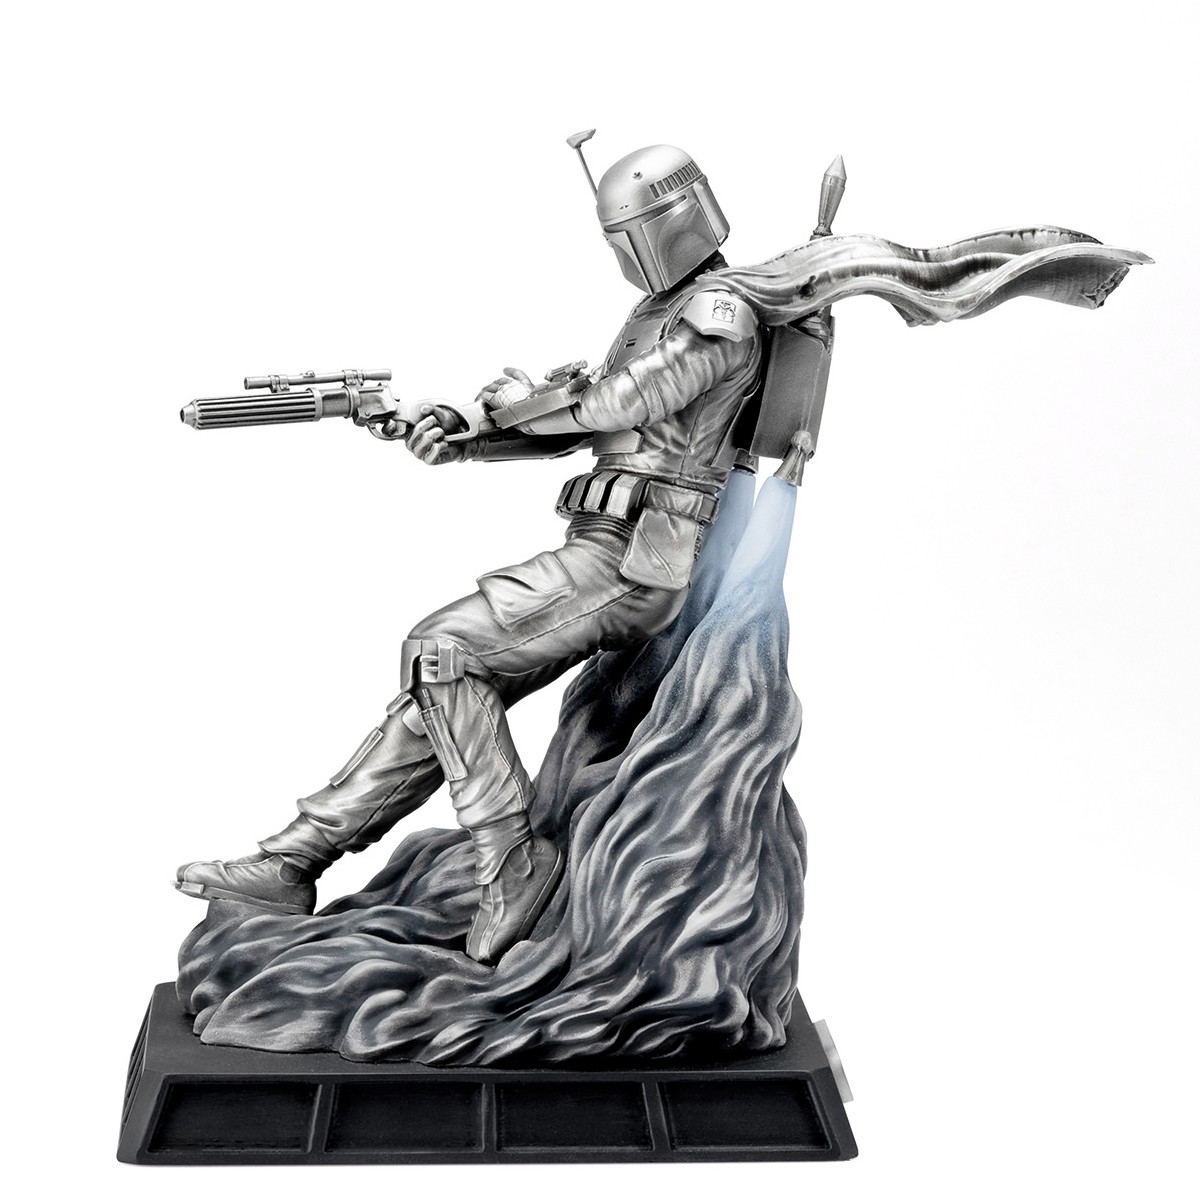 Boba Fett Battle Ready Figurine (Prototype Shown) View 3